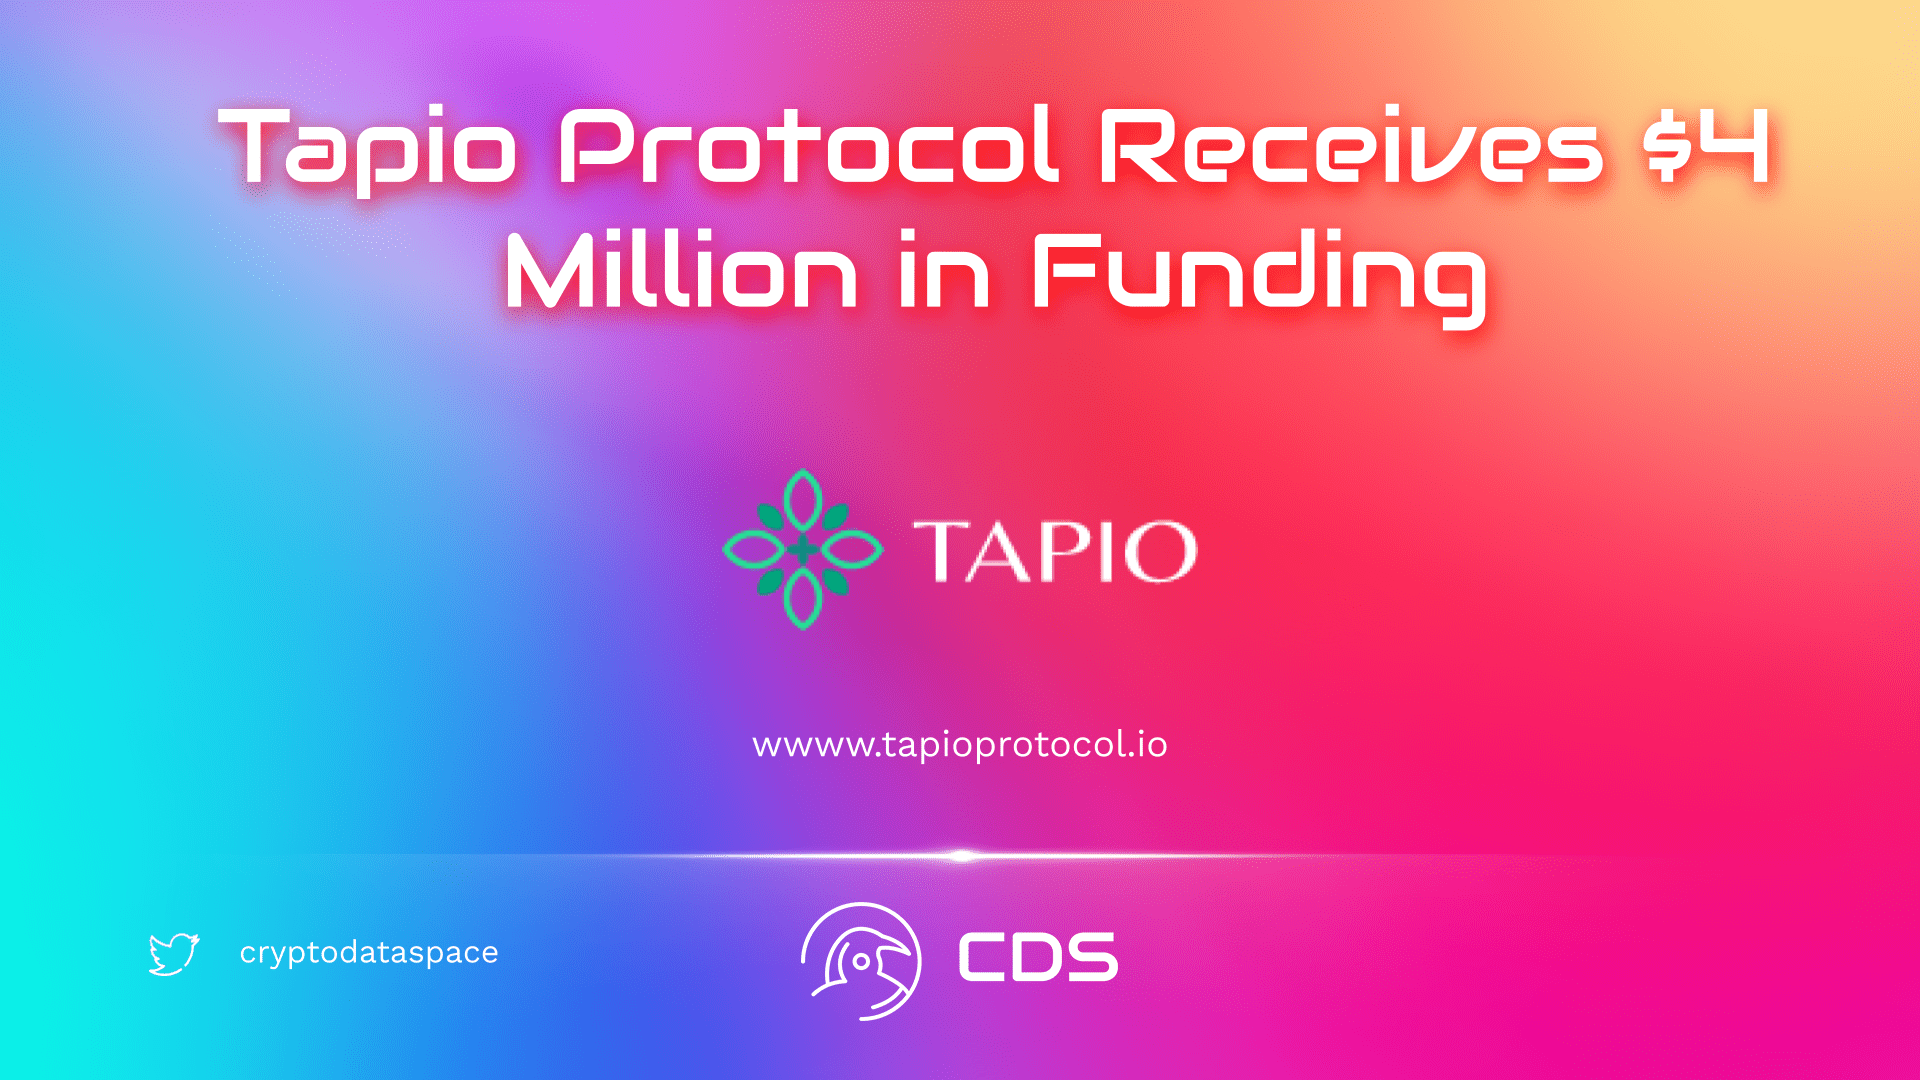 Tapio Protocol Receives $4 Million in Funding